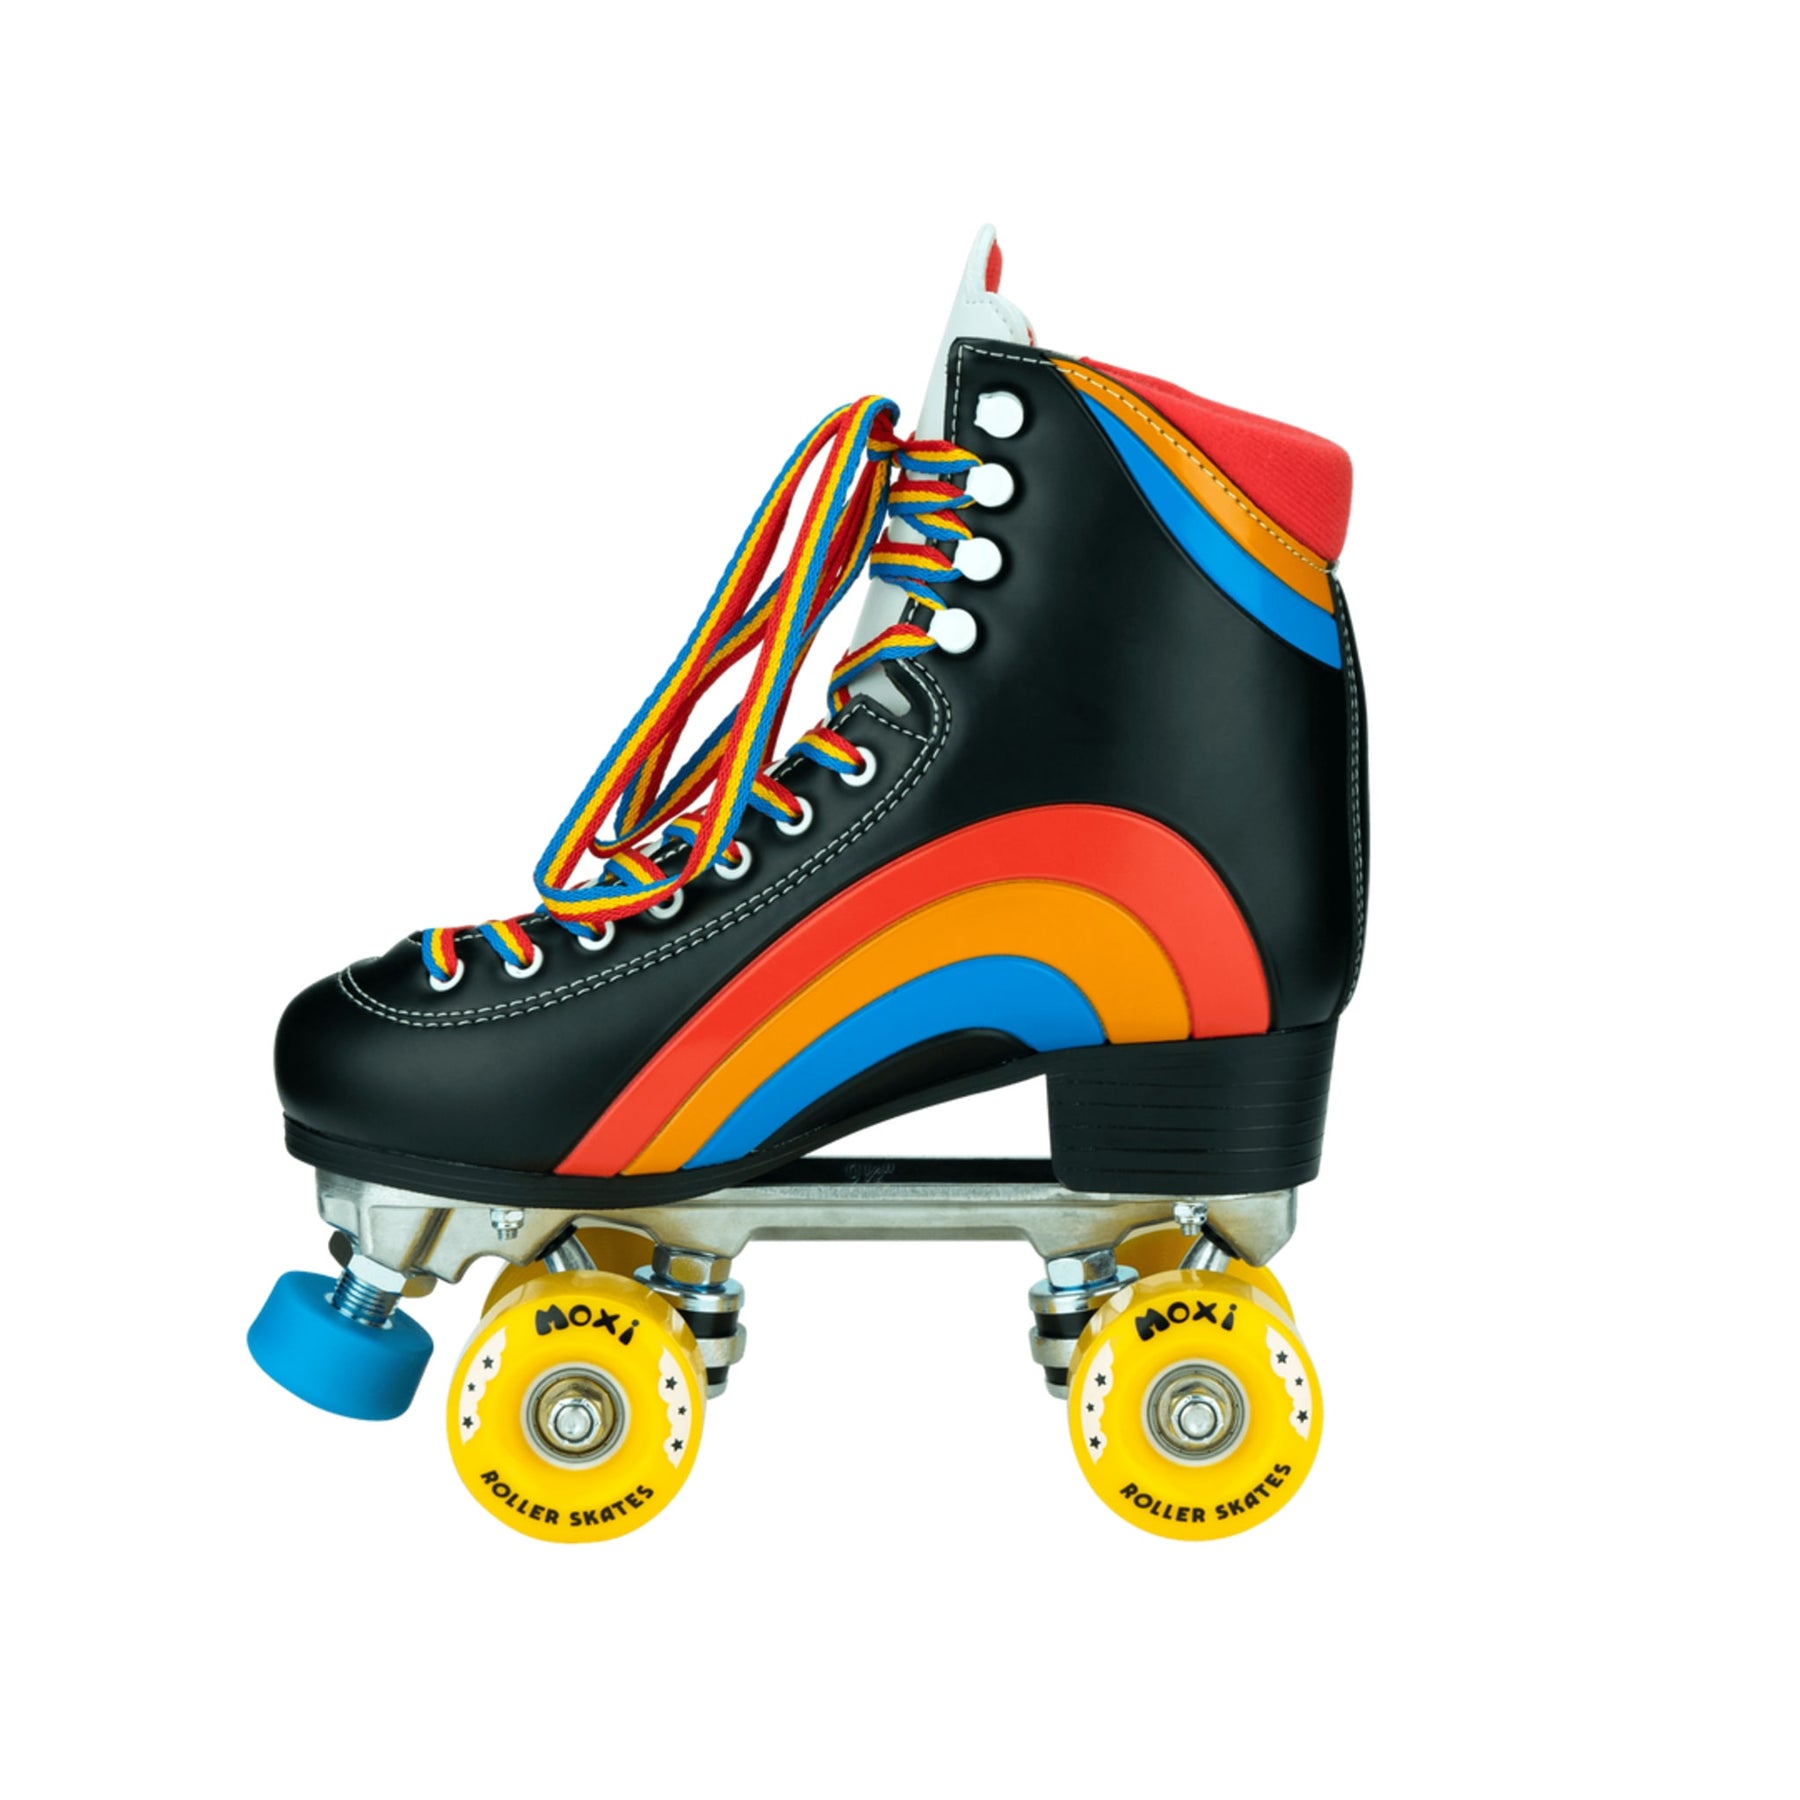 Moxi Skates - Rainbow Rider Black